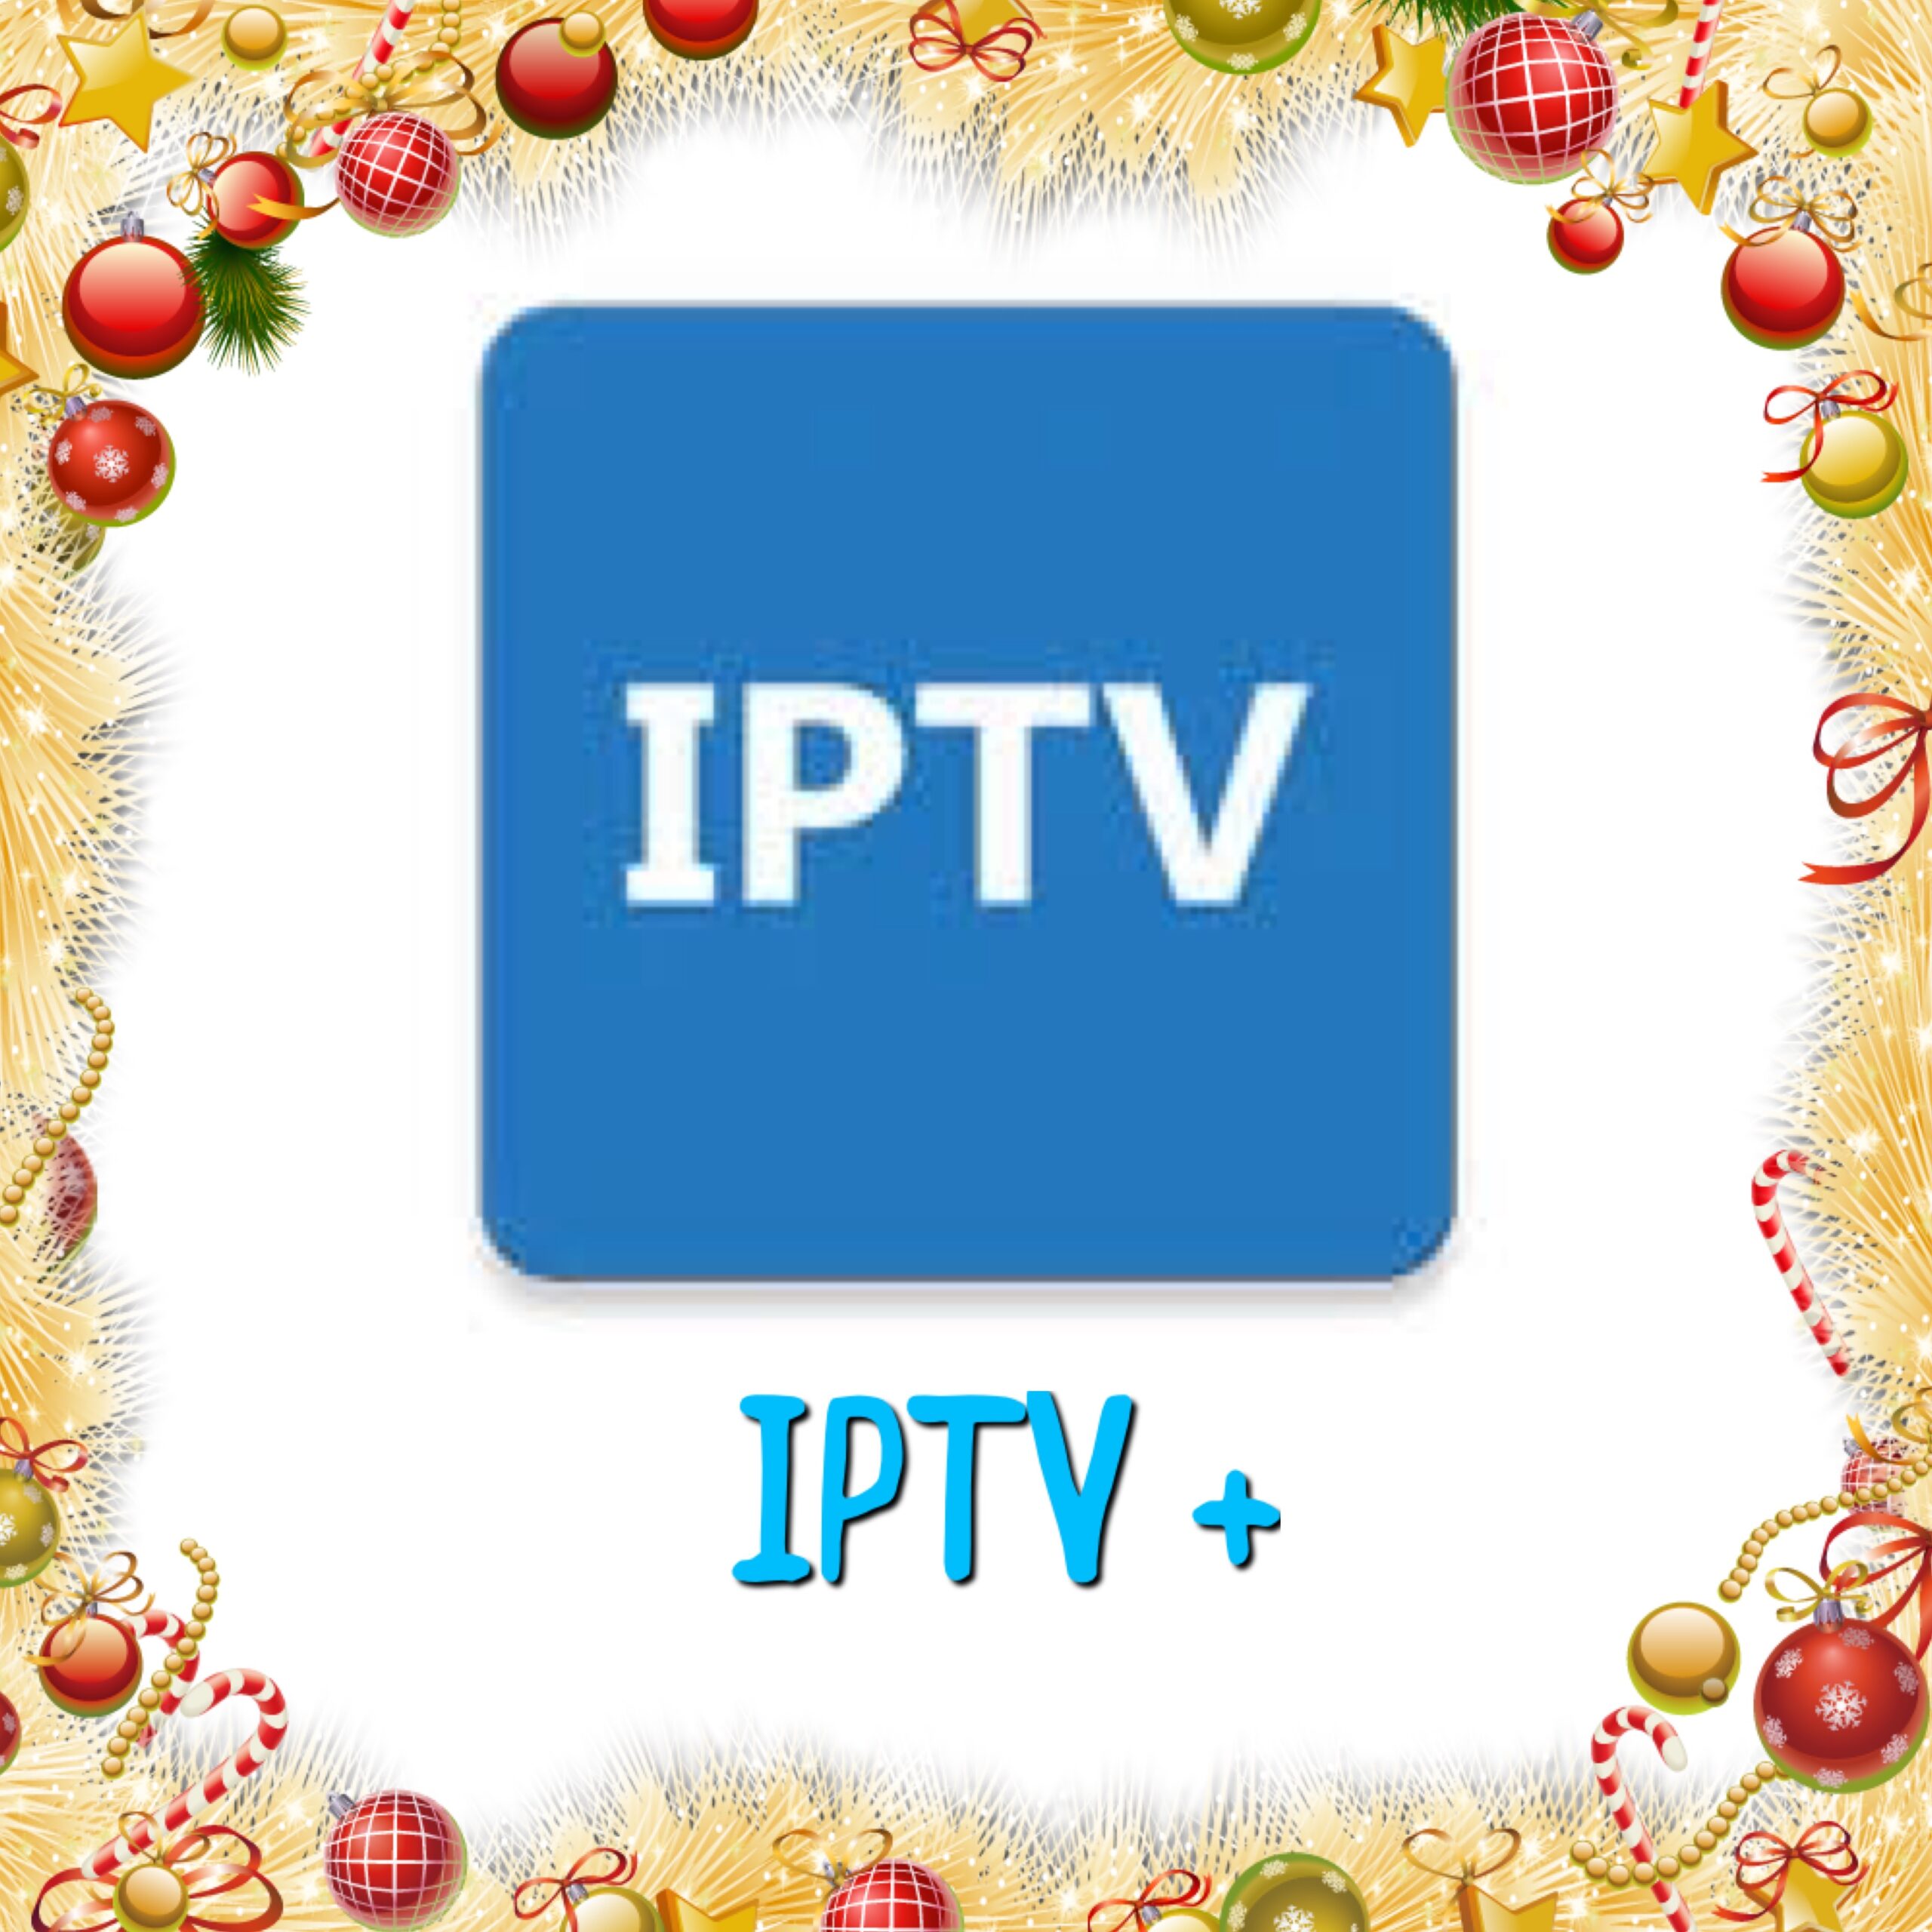 IPTV plus service subscription